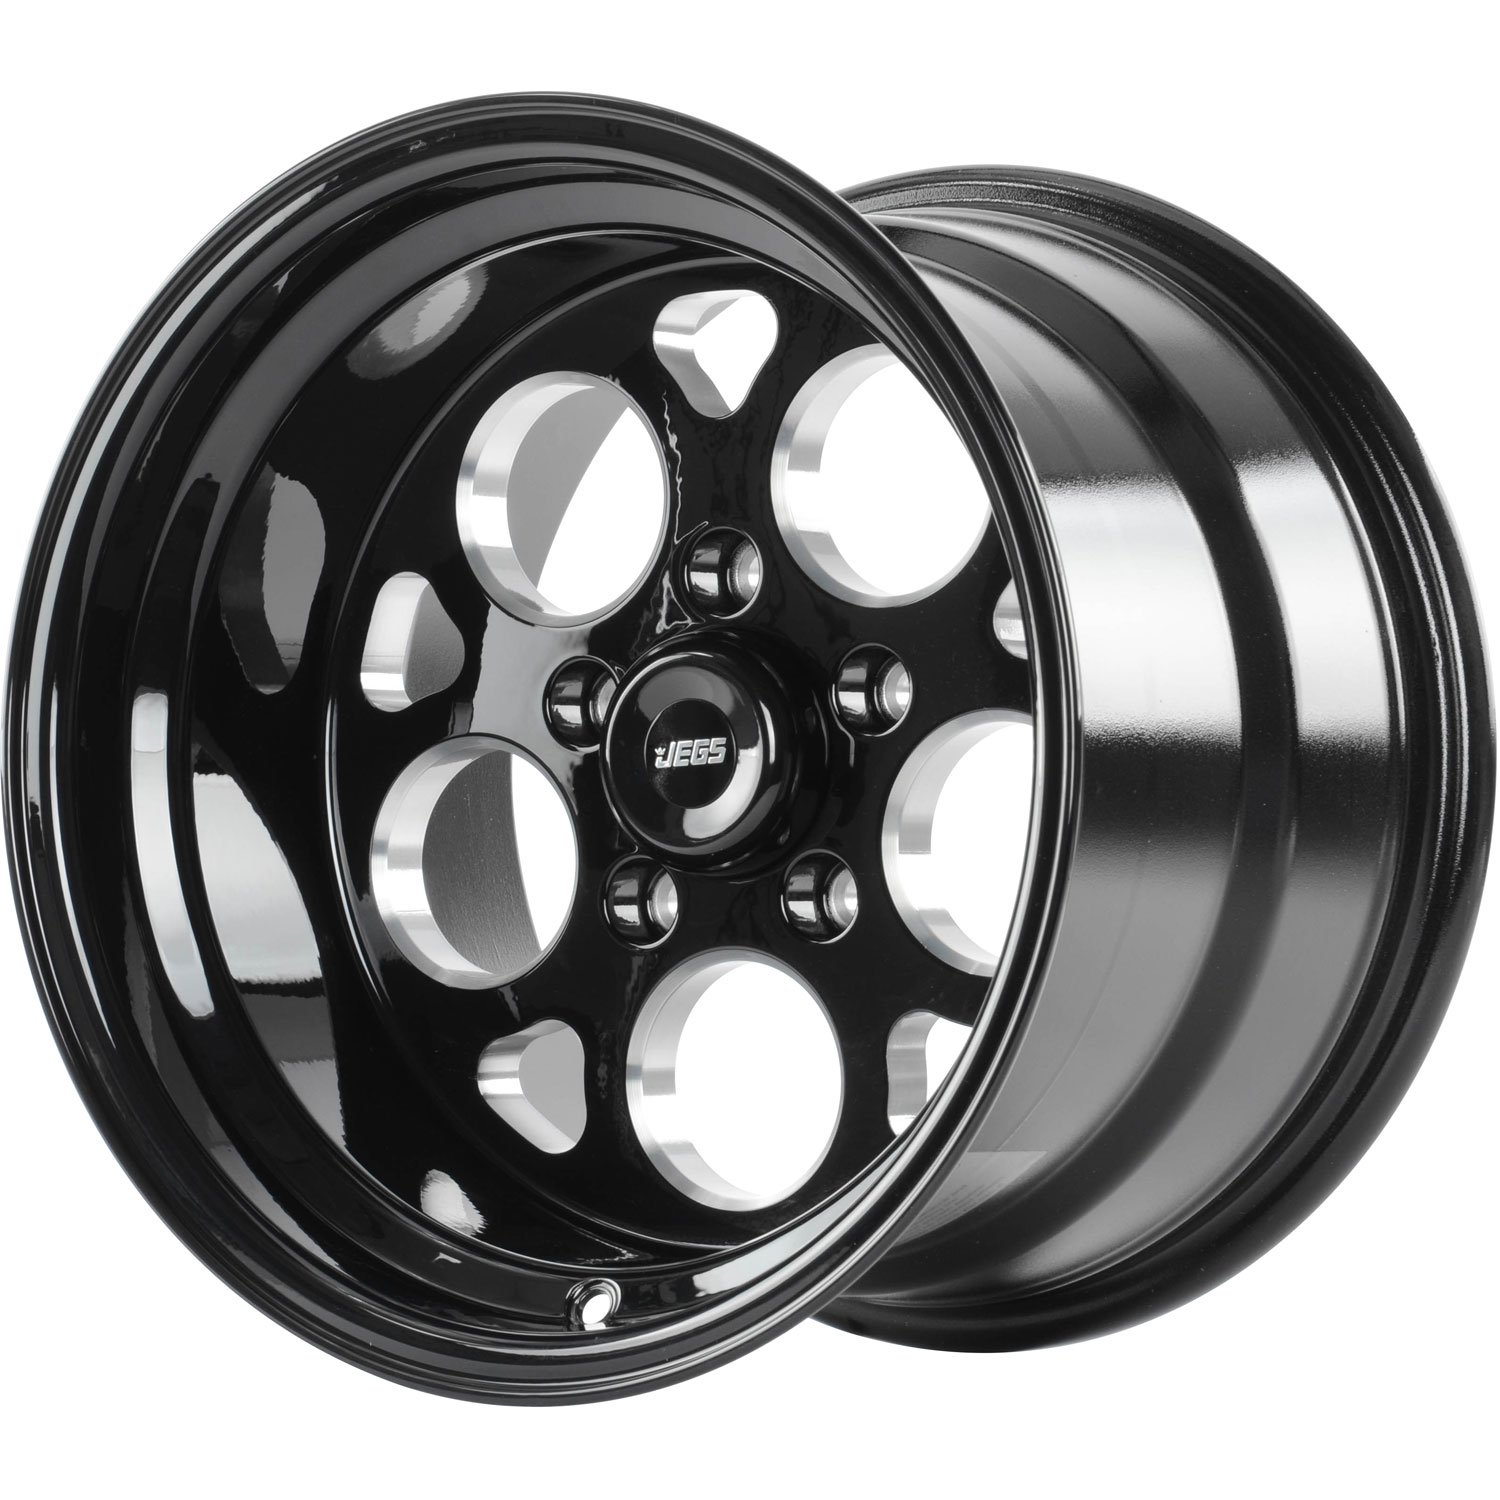 SSR Mag Wheel [Size: 15" x 10"] Black